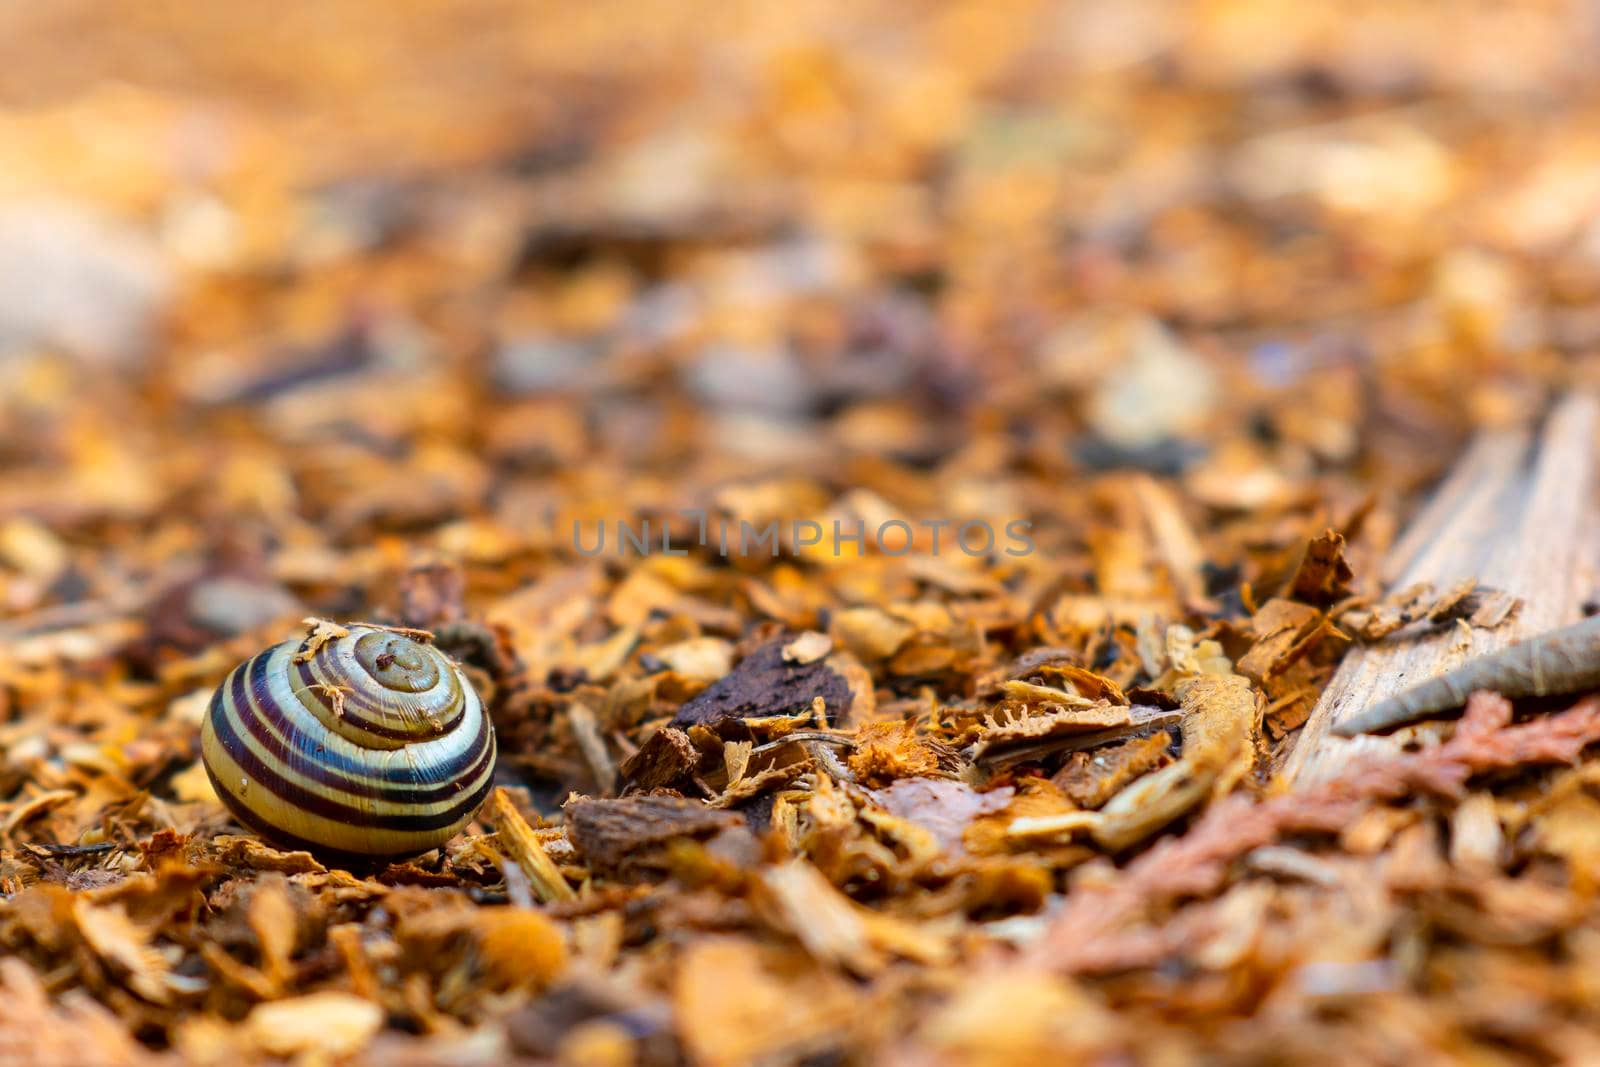 Striped snail shell in wood shavings. by GraffiTimi